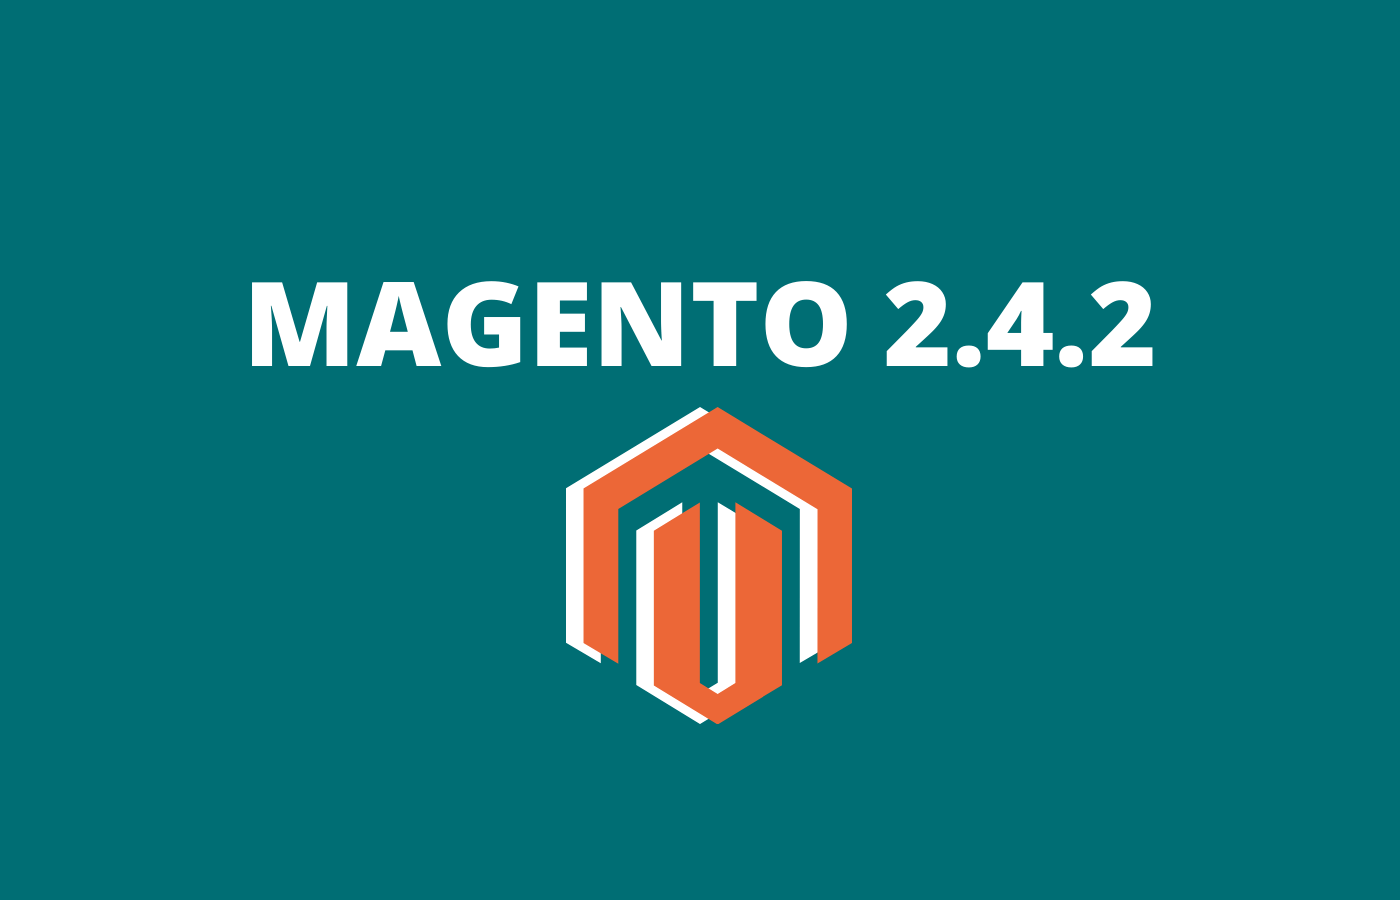 Magento 2.4.2 release notes Nederlandse uitleg